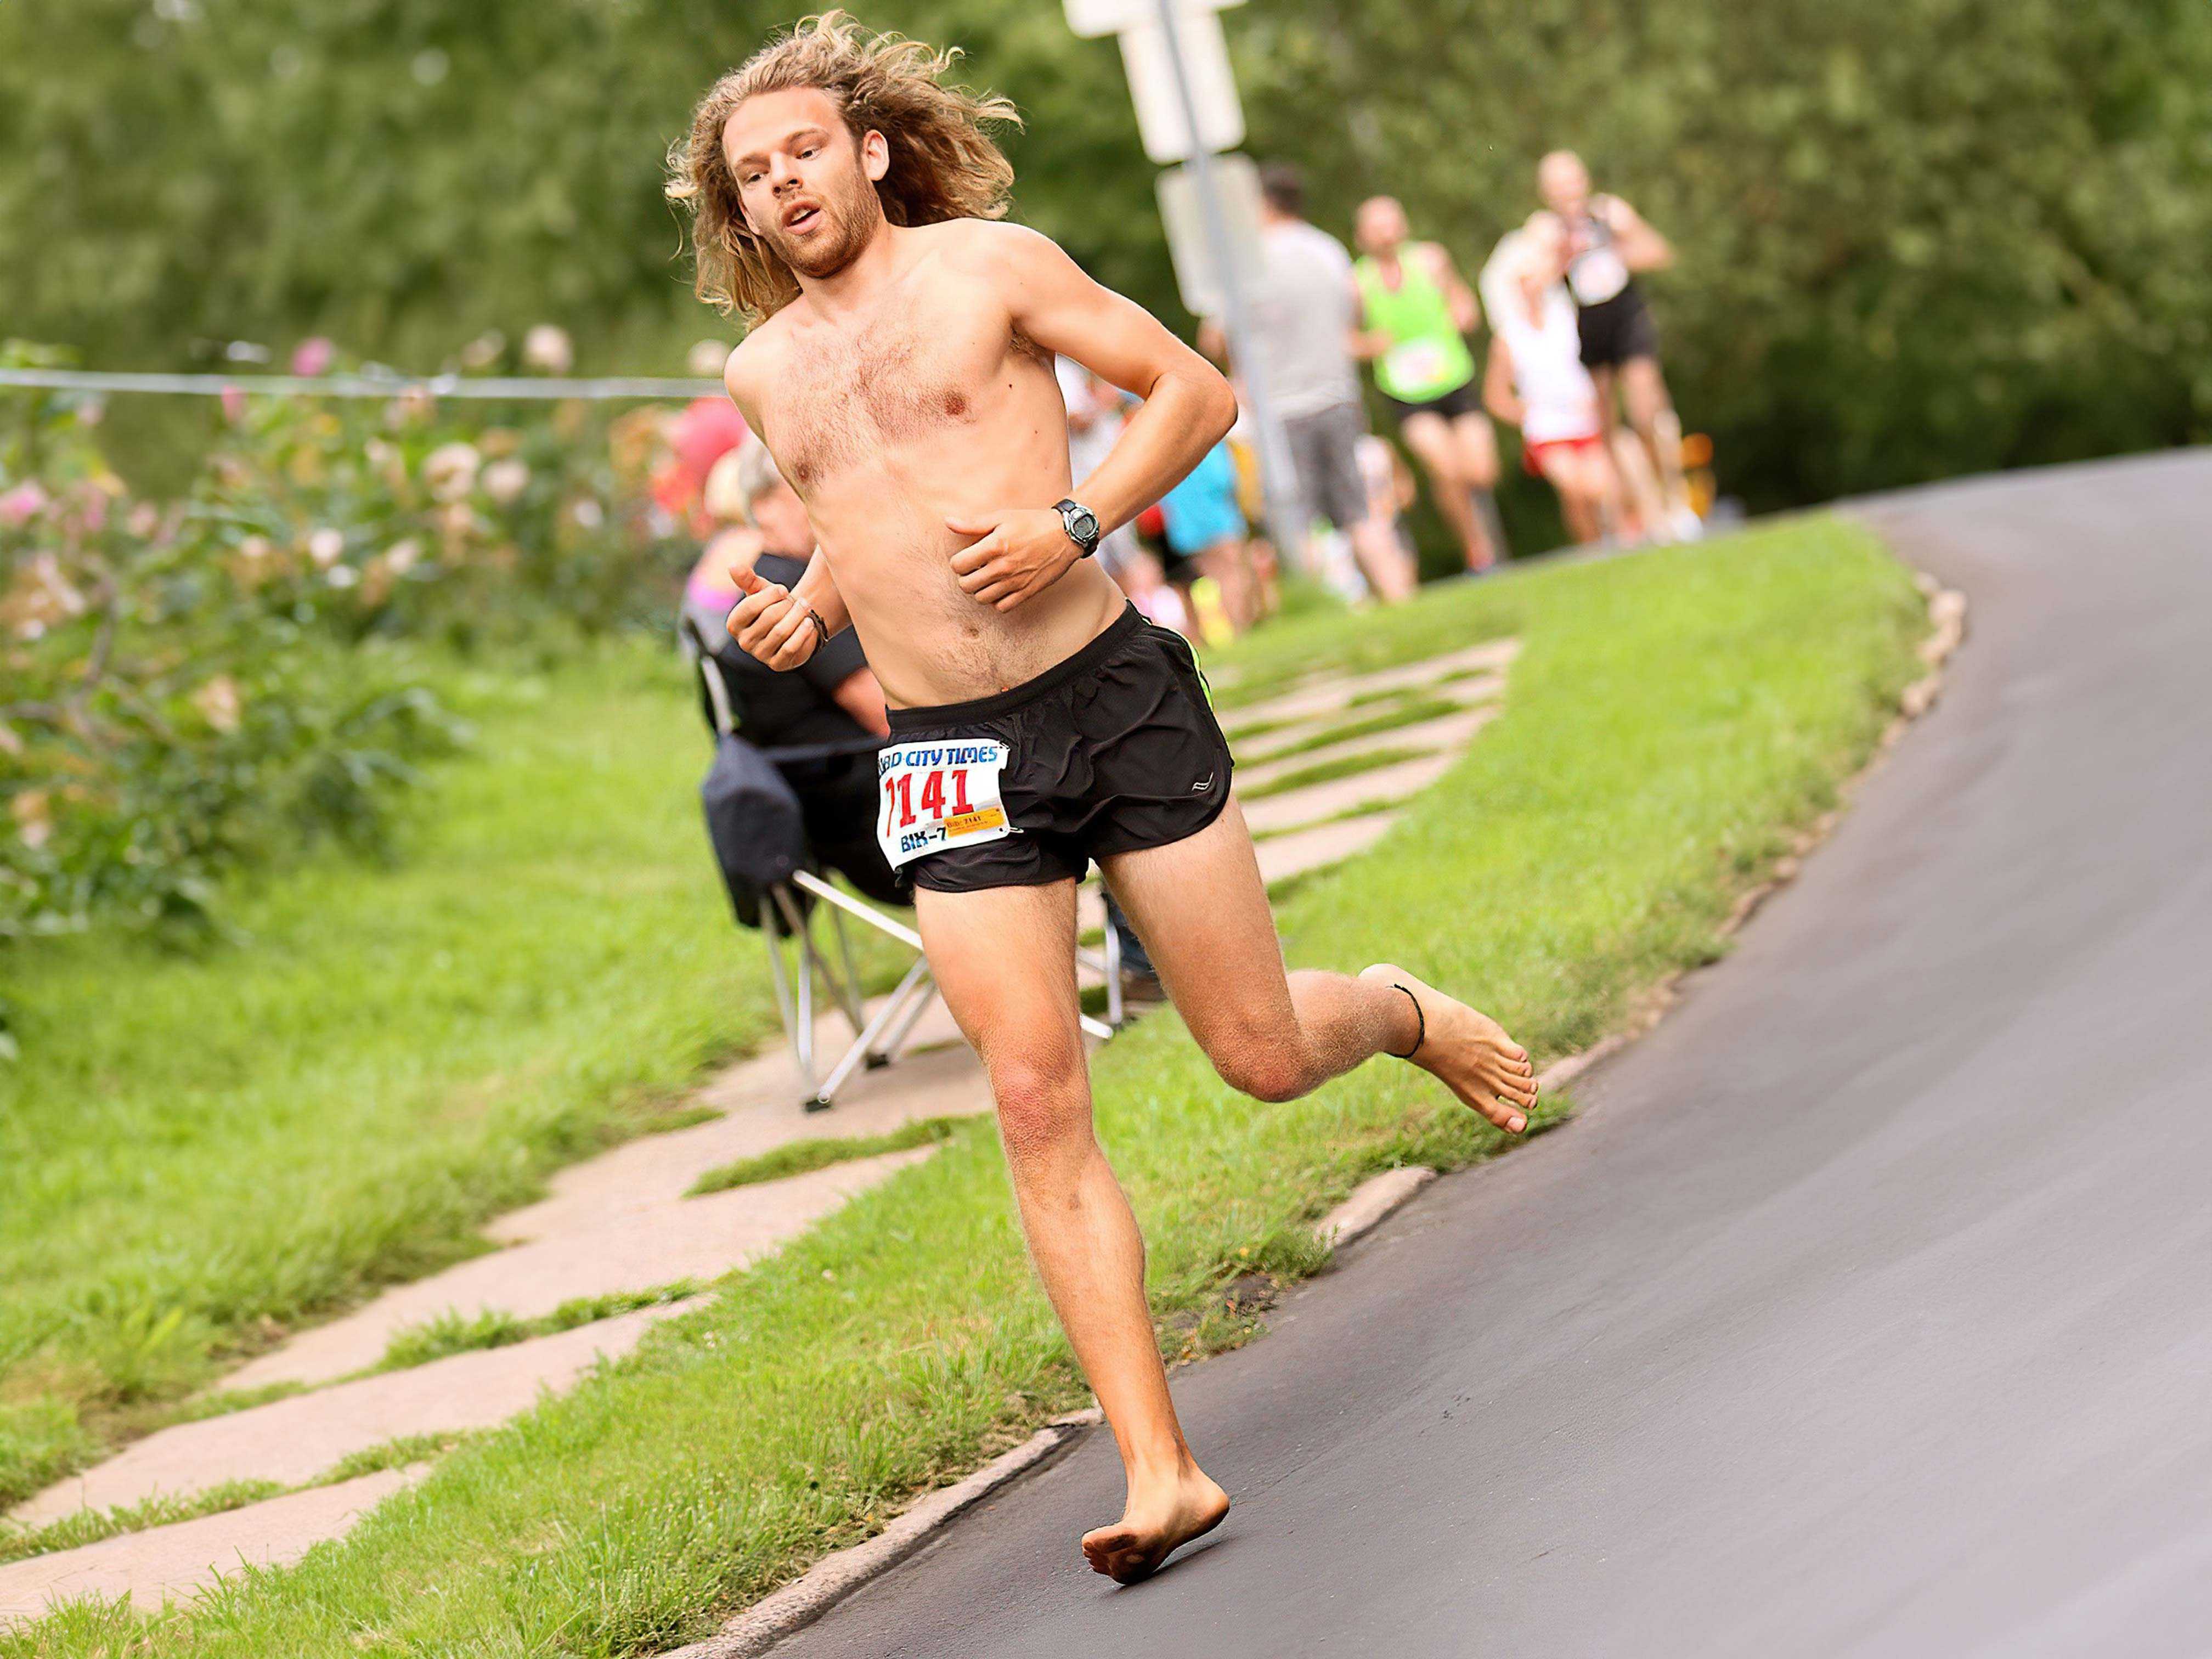 Stephen running the Met marathon barefoot.